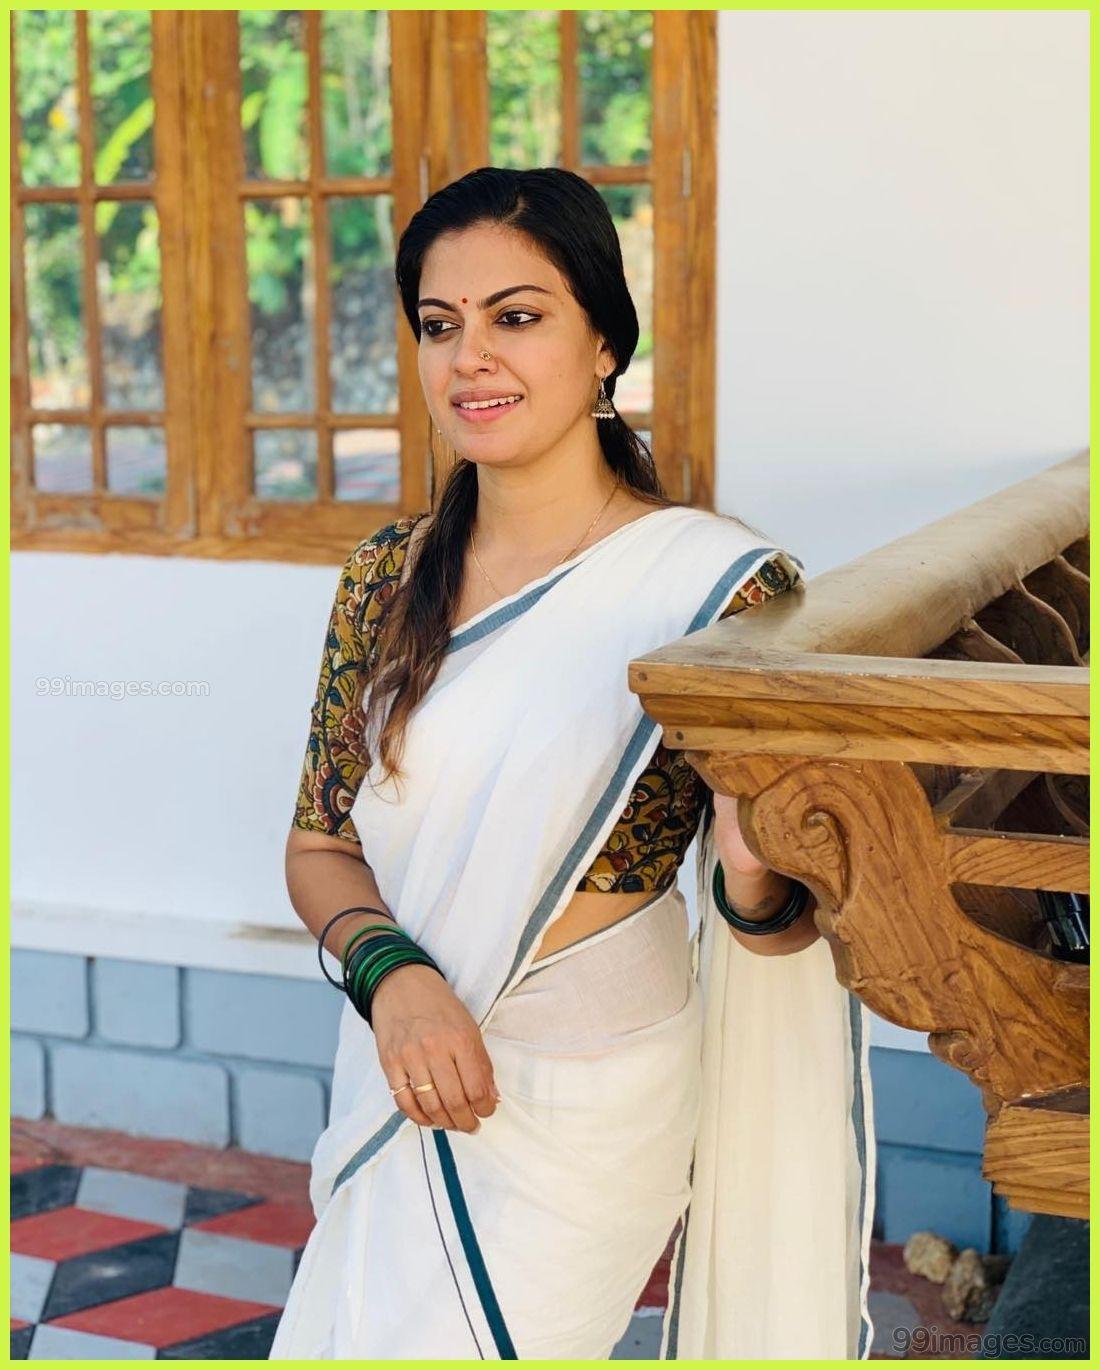 Malayalam Actress Mobile Wallpapers - Wallpaper Cave